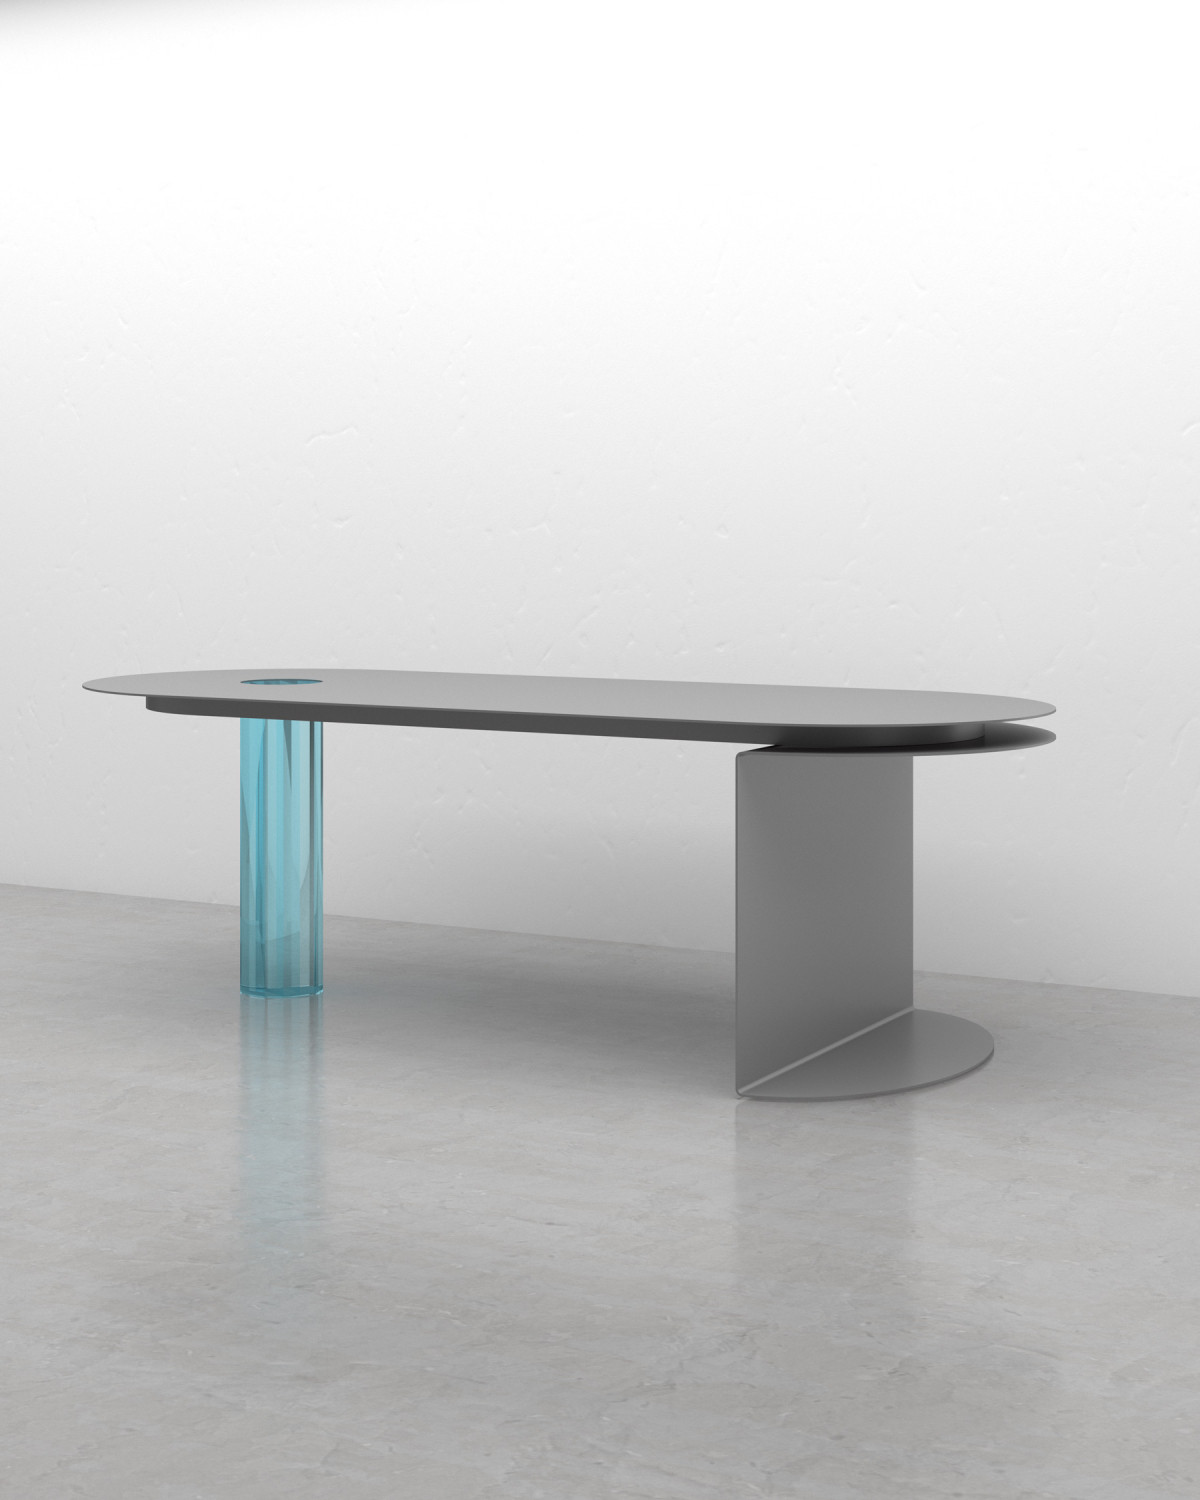 LANGERTISCH Caeruleum - Product Design - Aluminium Table - Contemporary Object - Hamburg Design